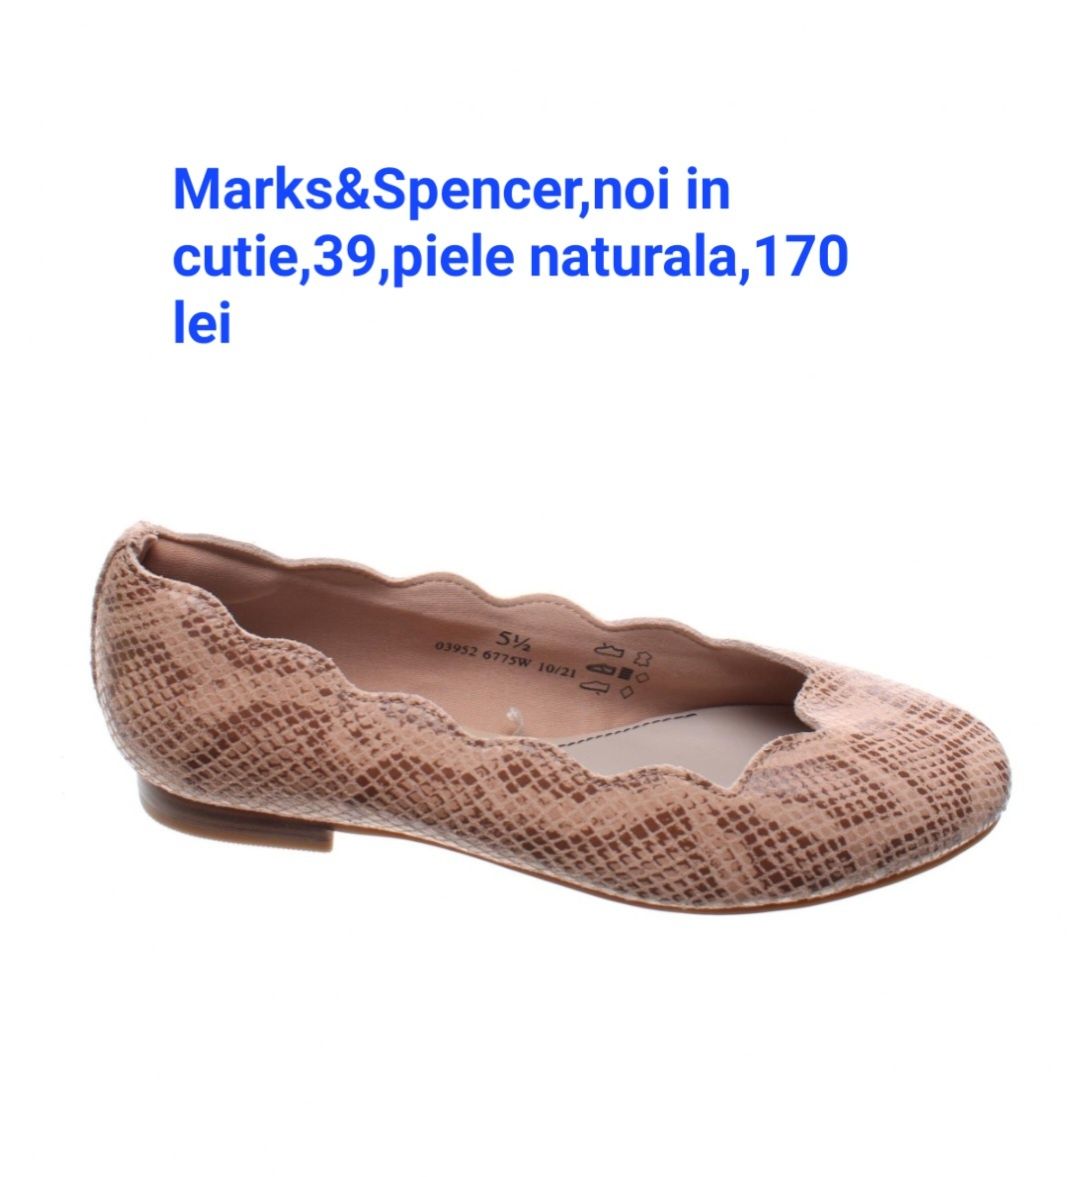 Pantofi Marks&Spencer noi piele